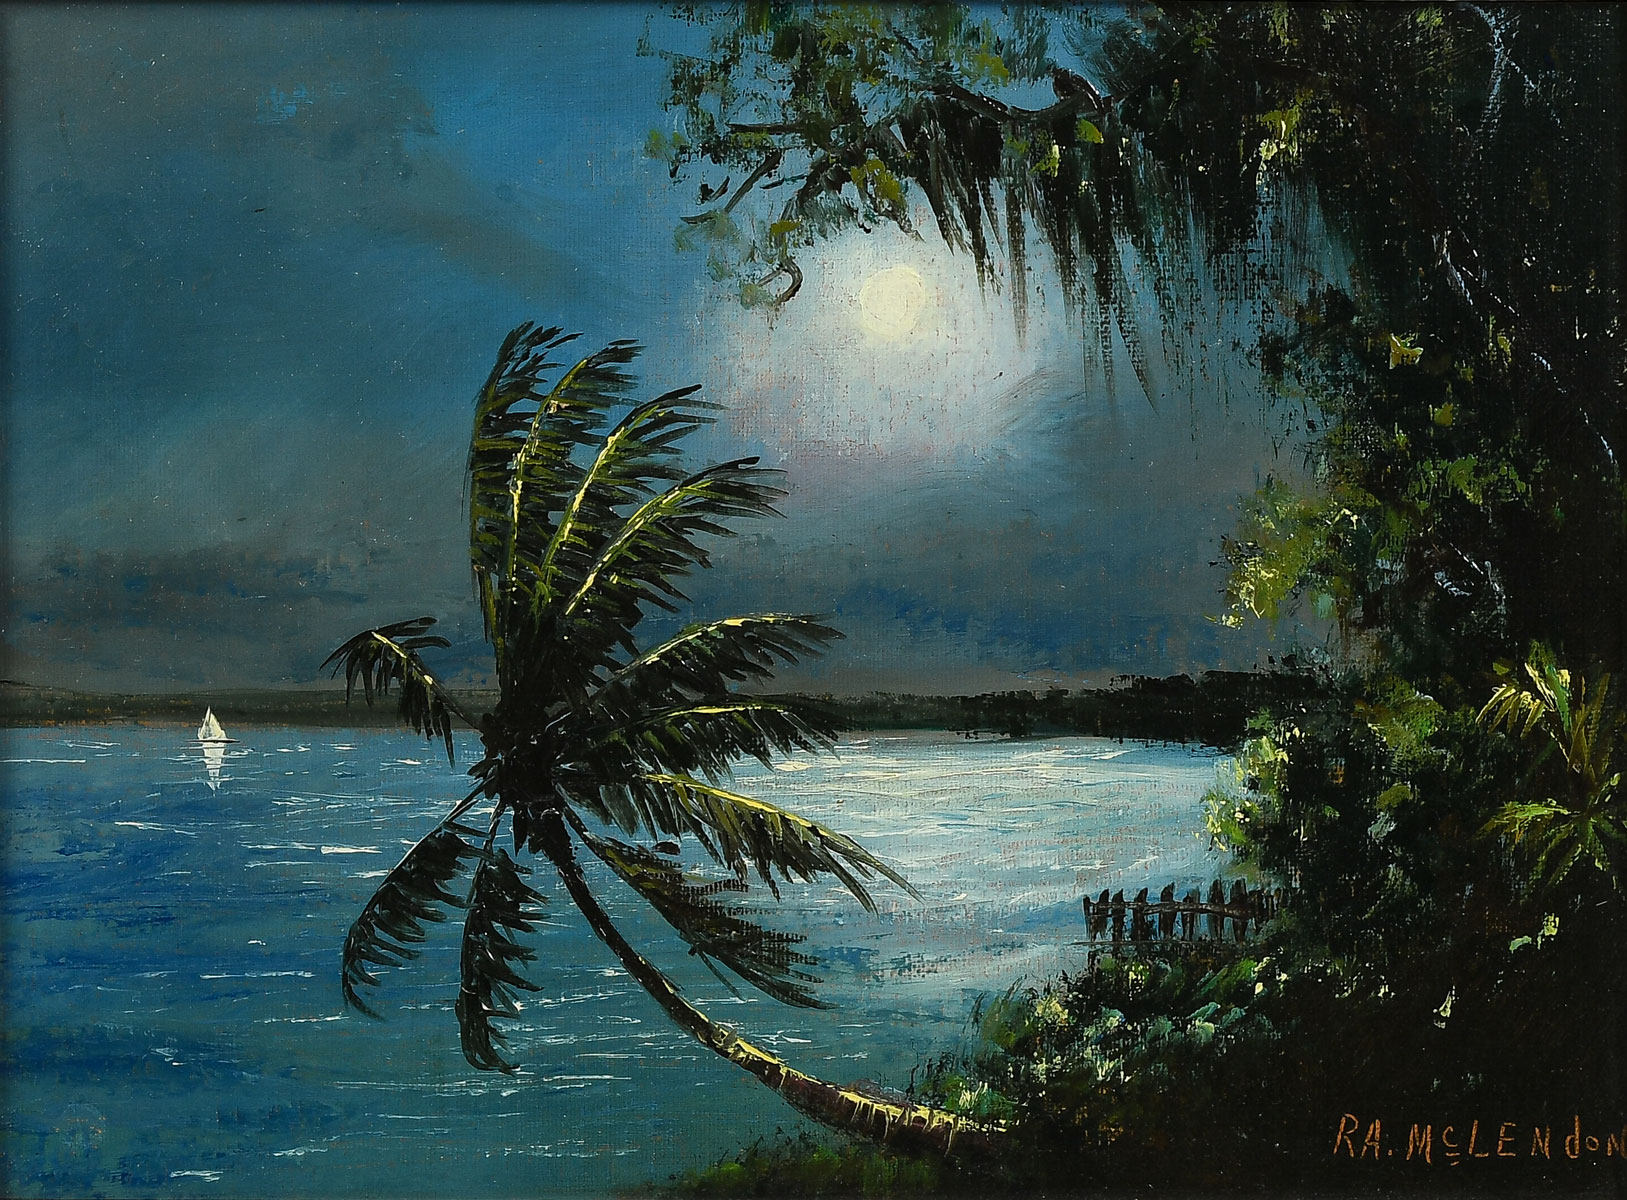 MCLENDON, R.A., (American,1932-): Florida